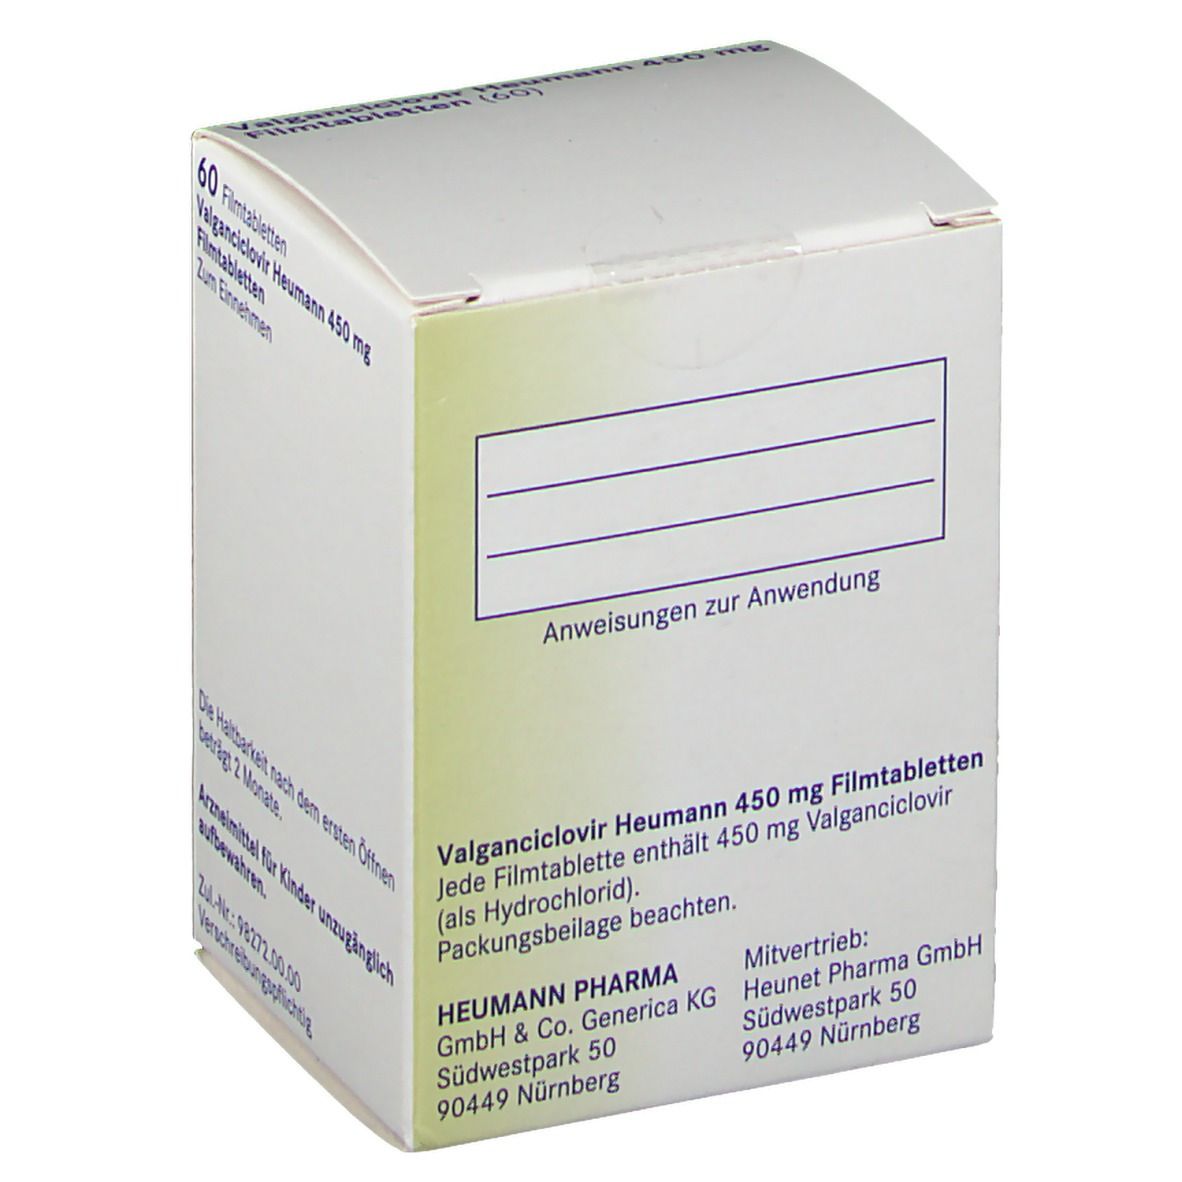 Valganciclovir Heumann 450 mg